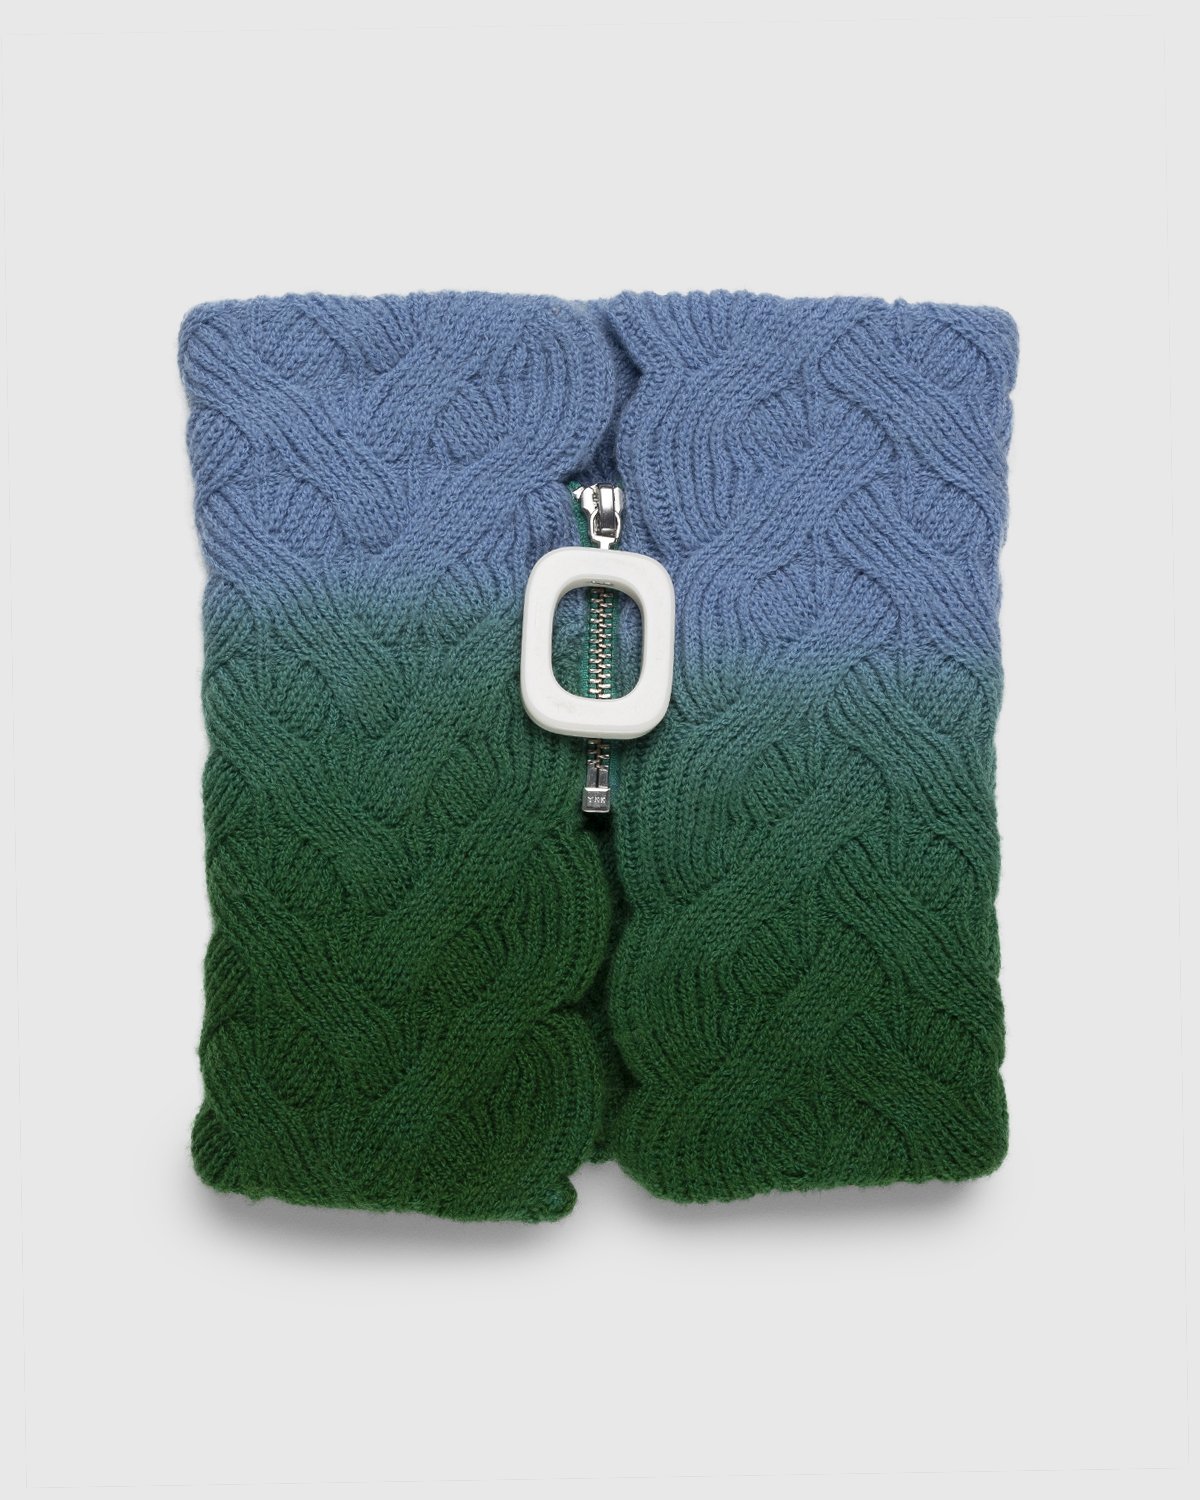 J.W. Anderson - Cable Knit Foldover Neckband Green/Blue - Accessories - Multi - Image 1